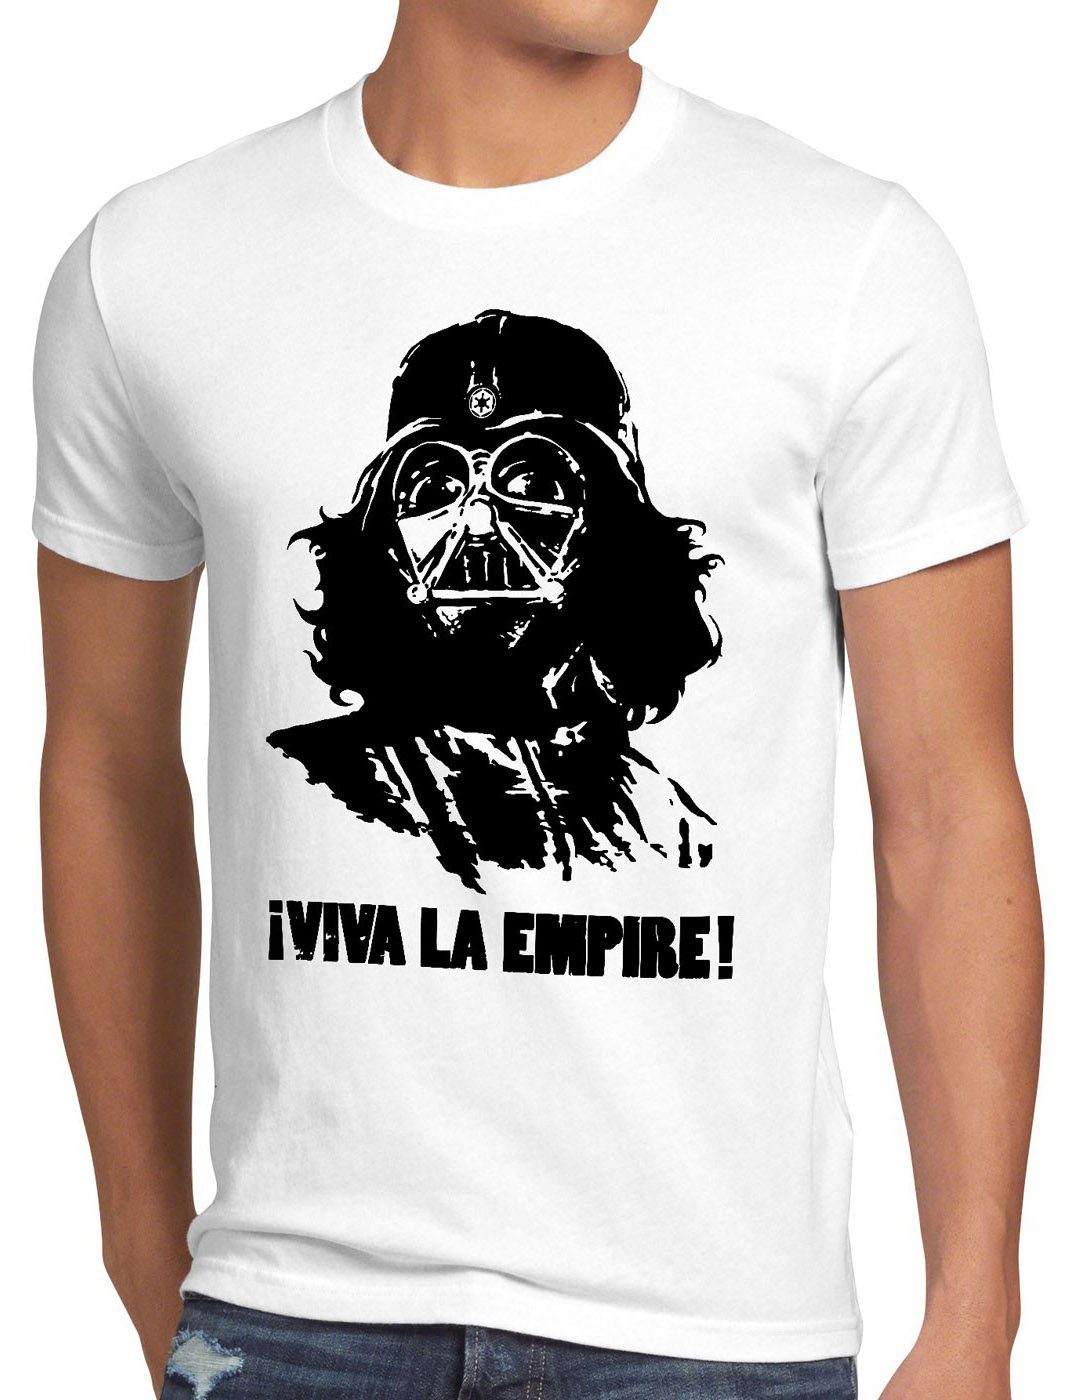 style3 Print-Shirt Herren revolution Imperium vader kuba wars che weiß T-Shirt star guevara Viva darth